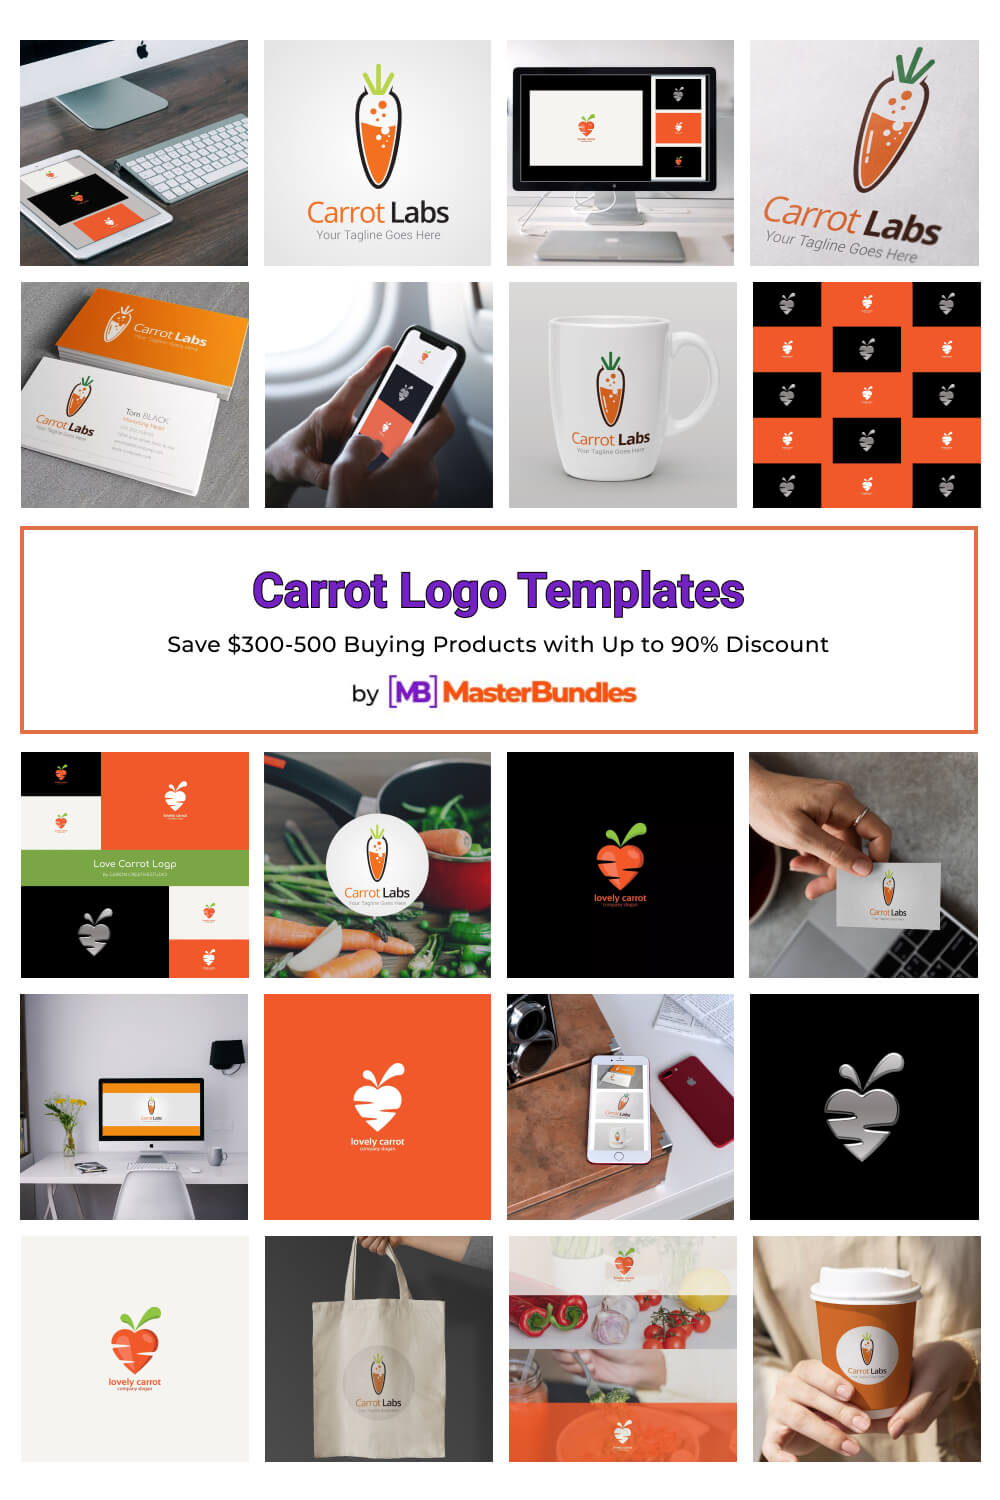 carrot logo templates pinterest image.